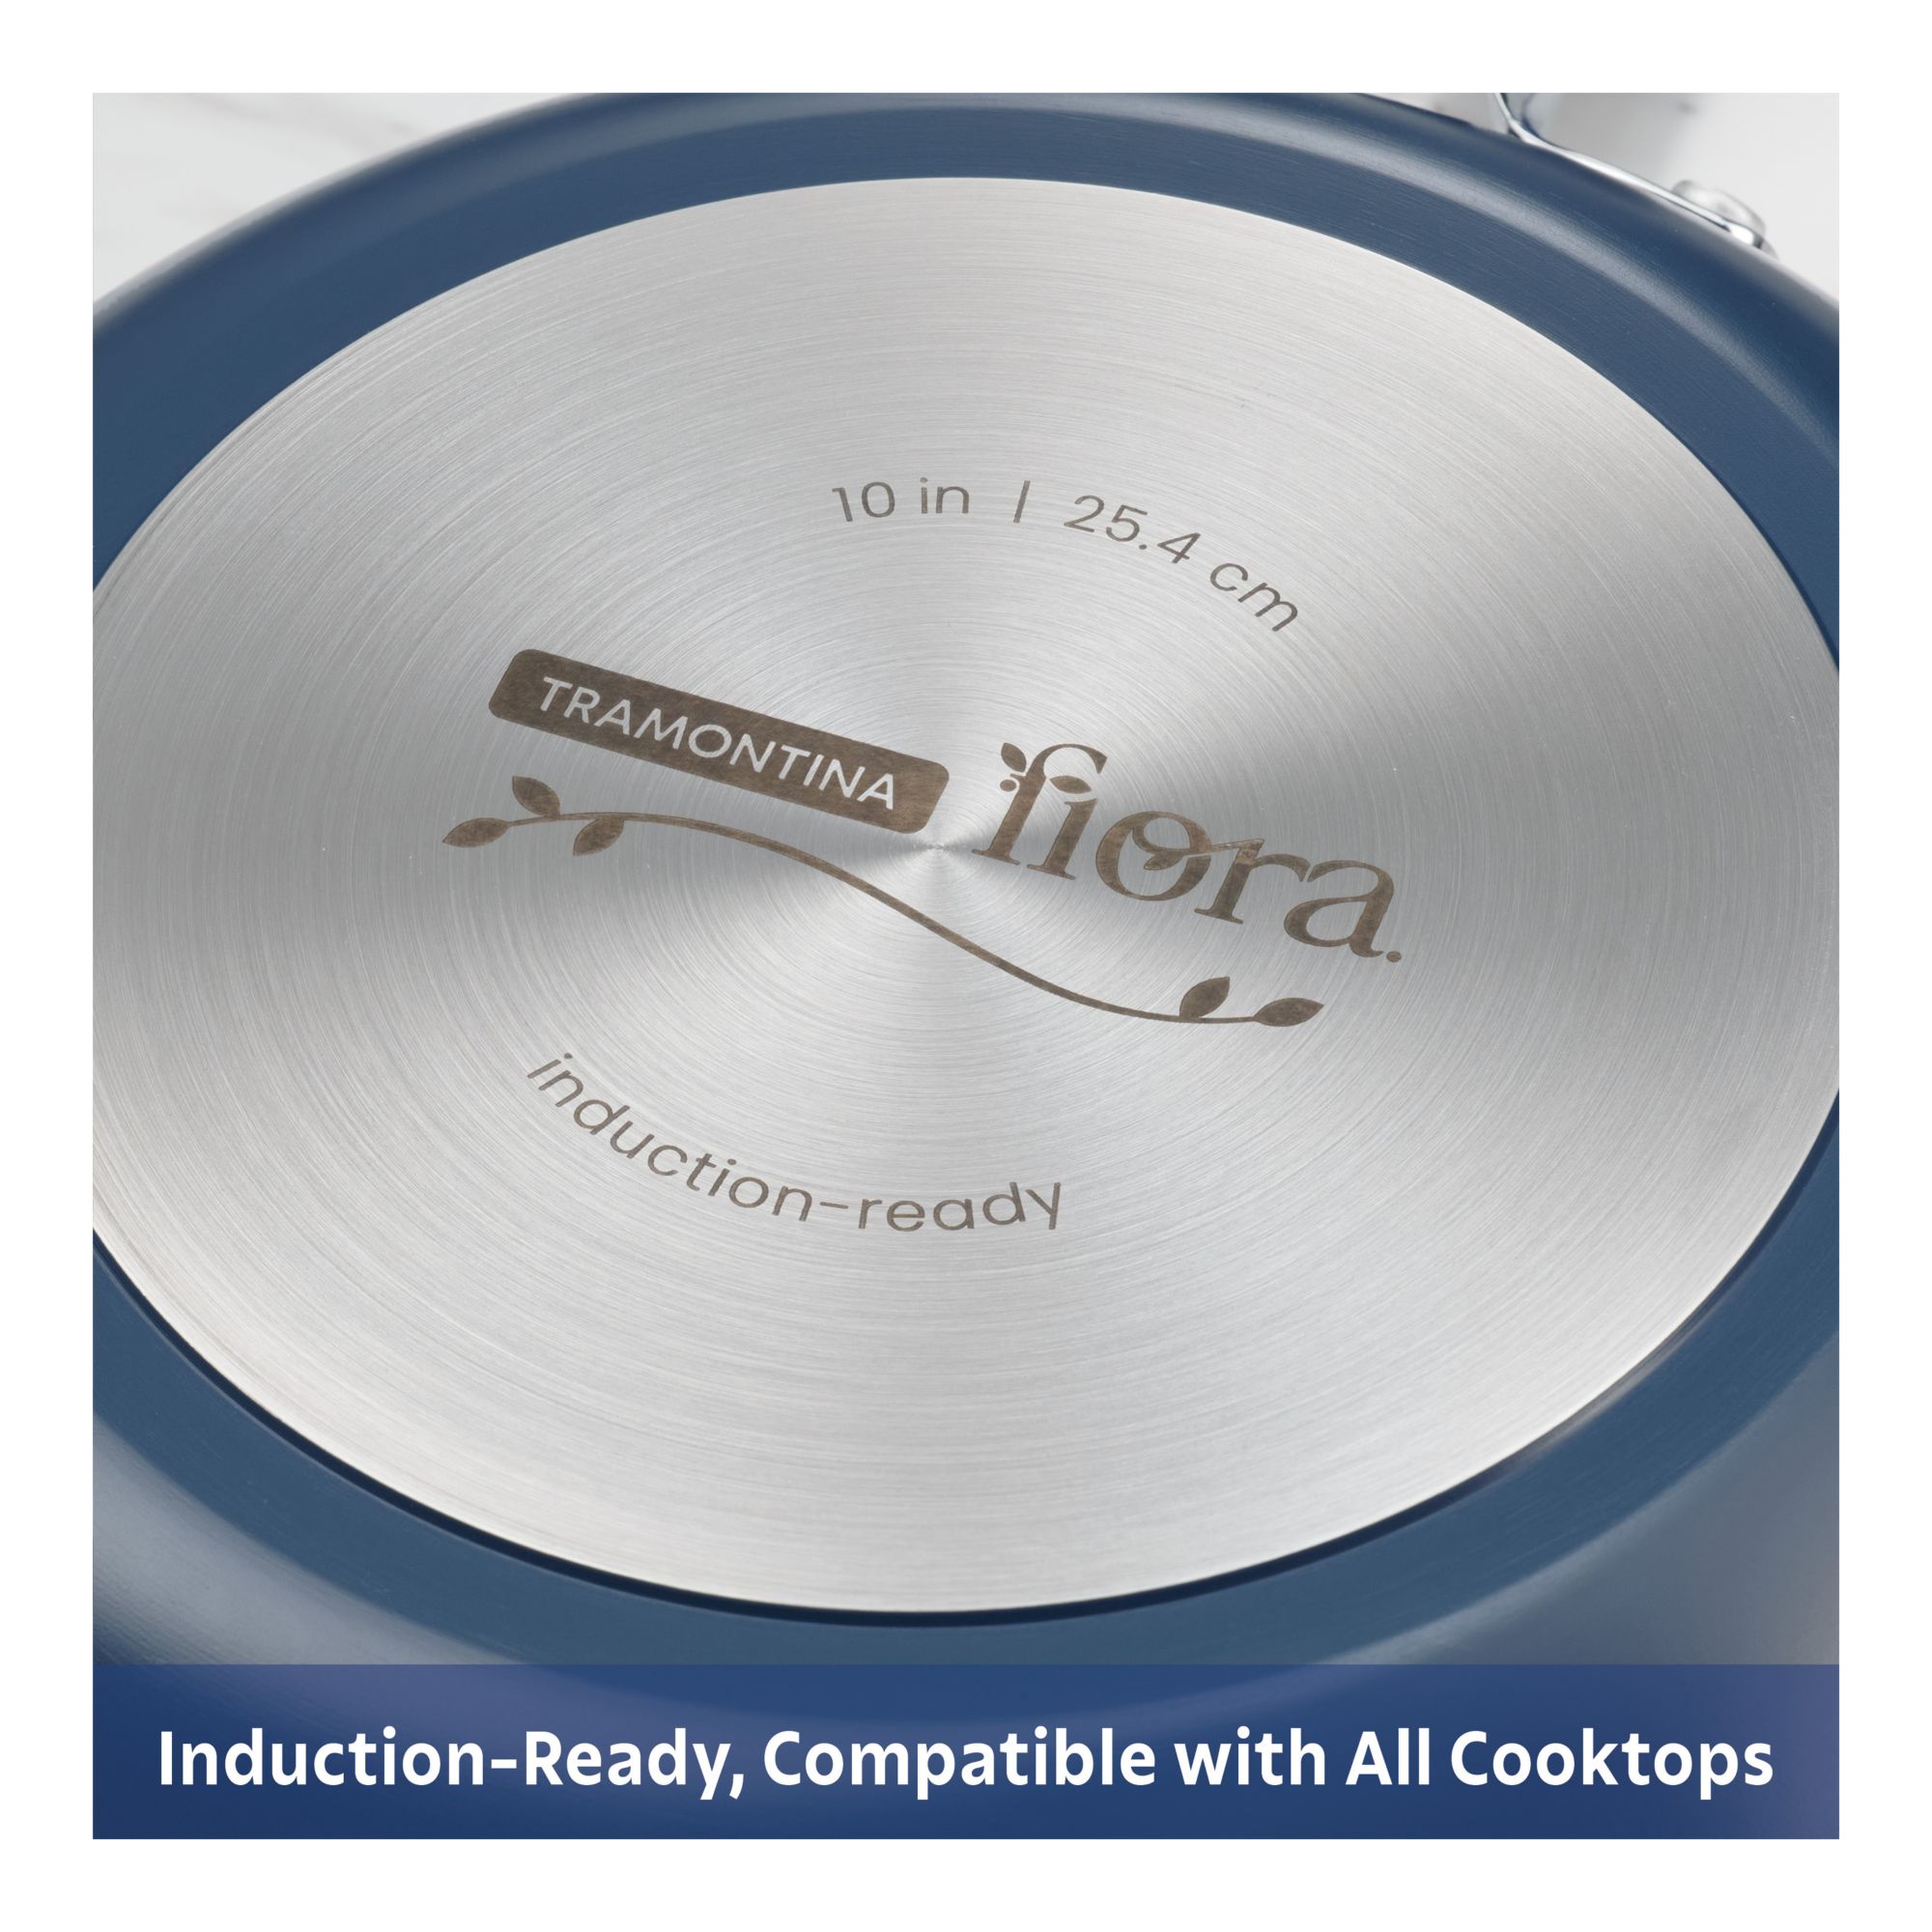 Tramontina Fiora 10-Piece Cold Forged Ceramic Nonstick Cookware Set - Blue